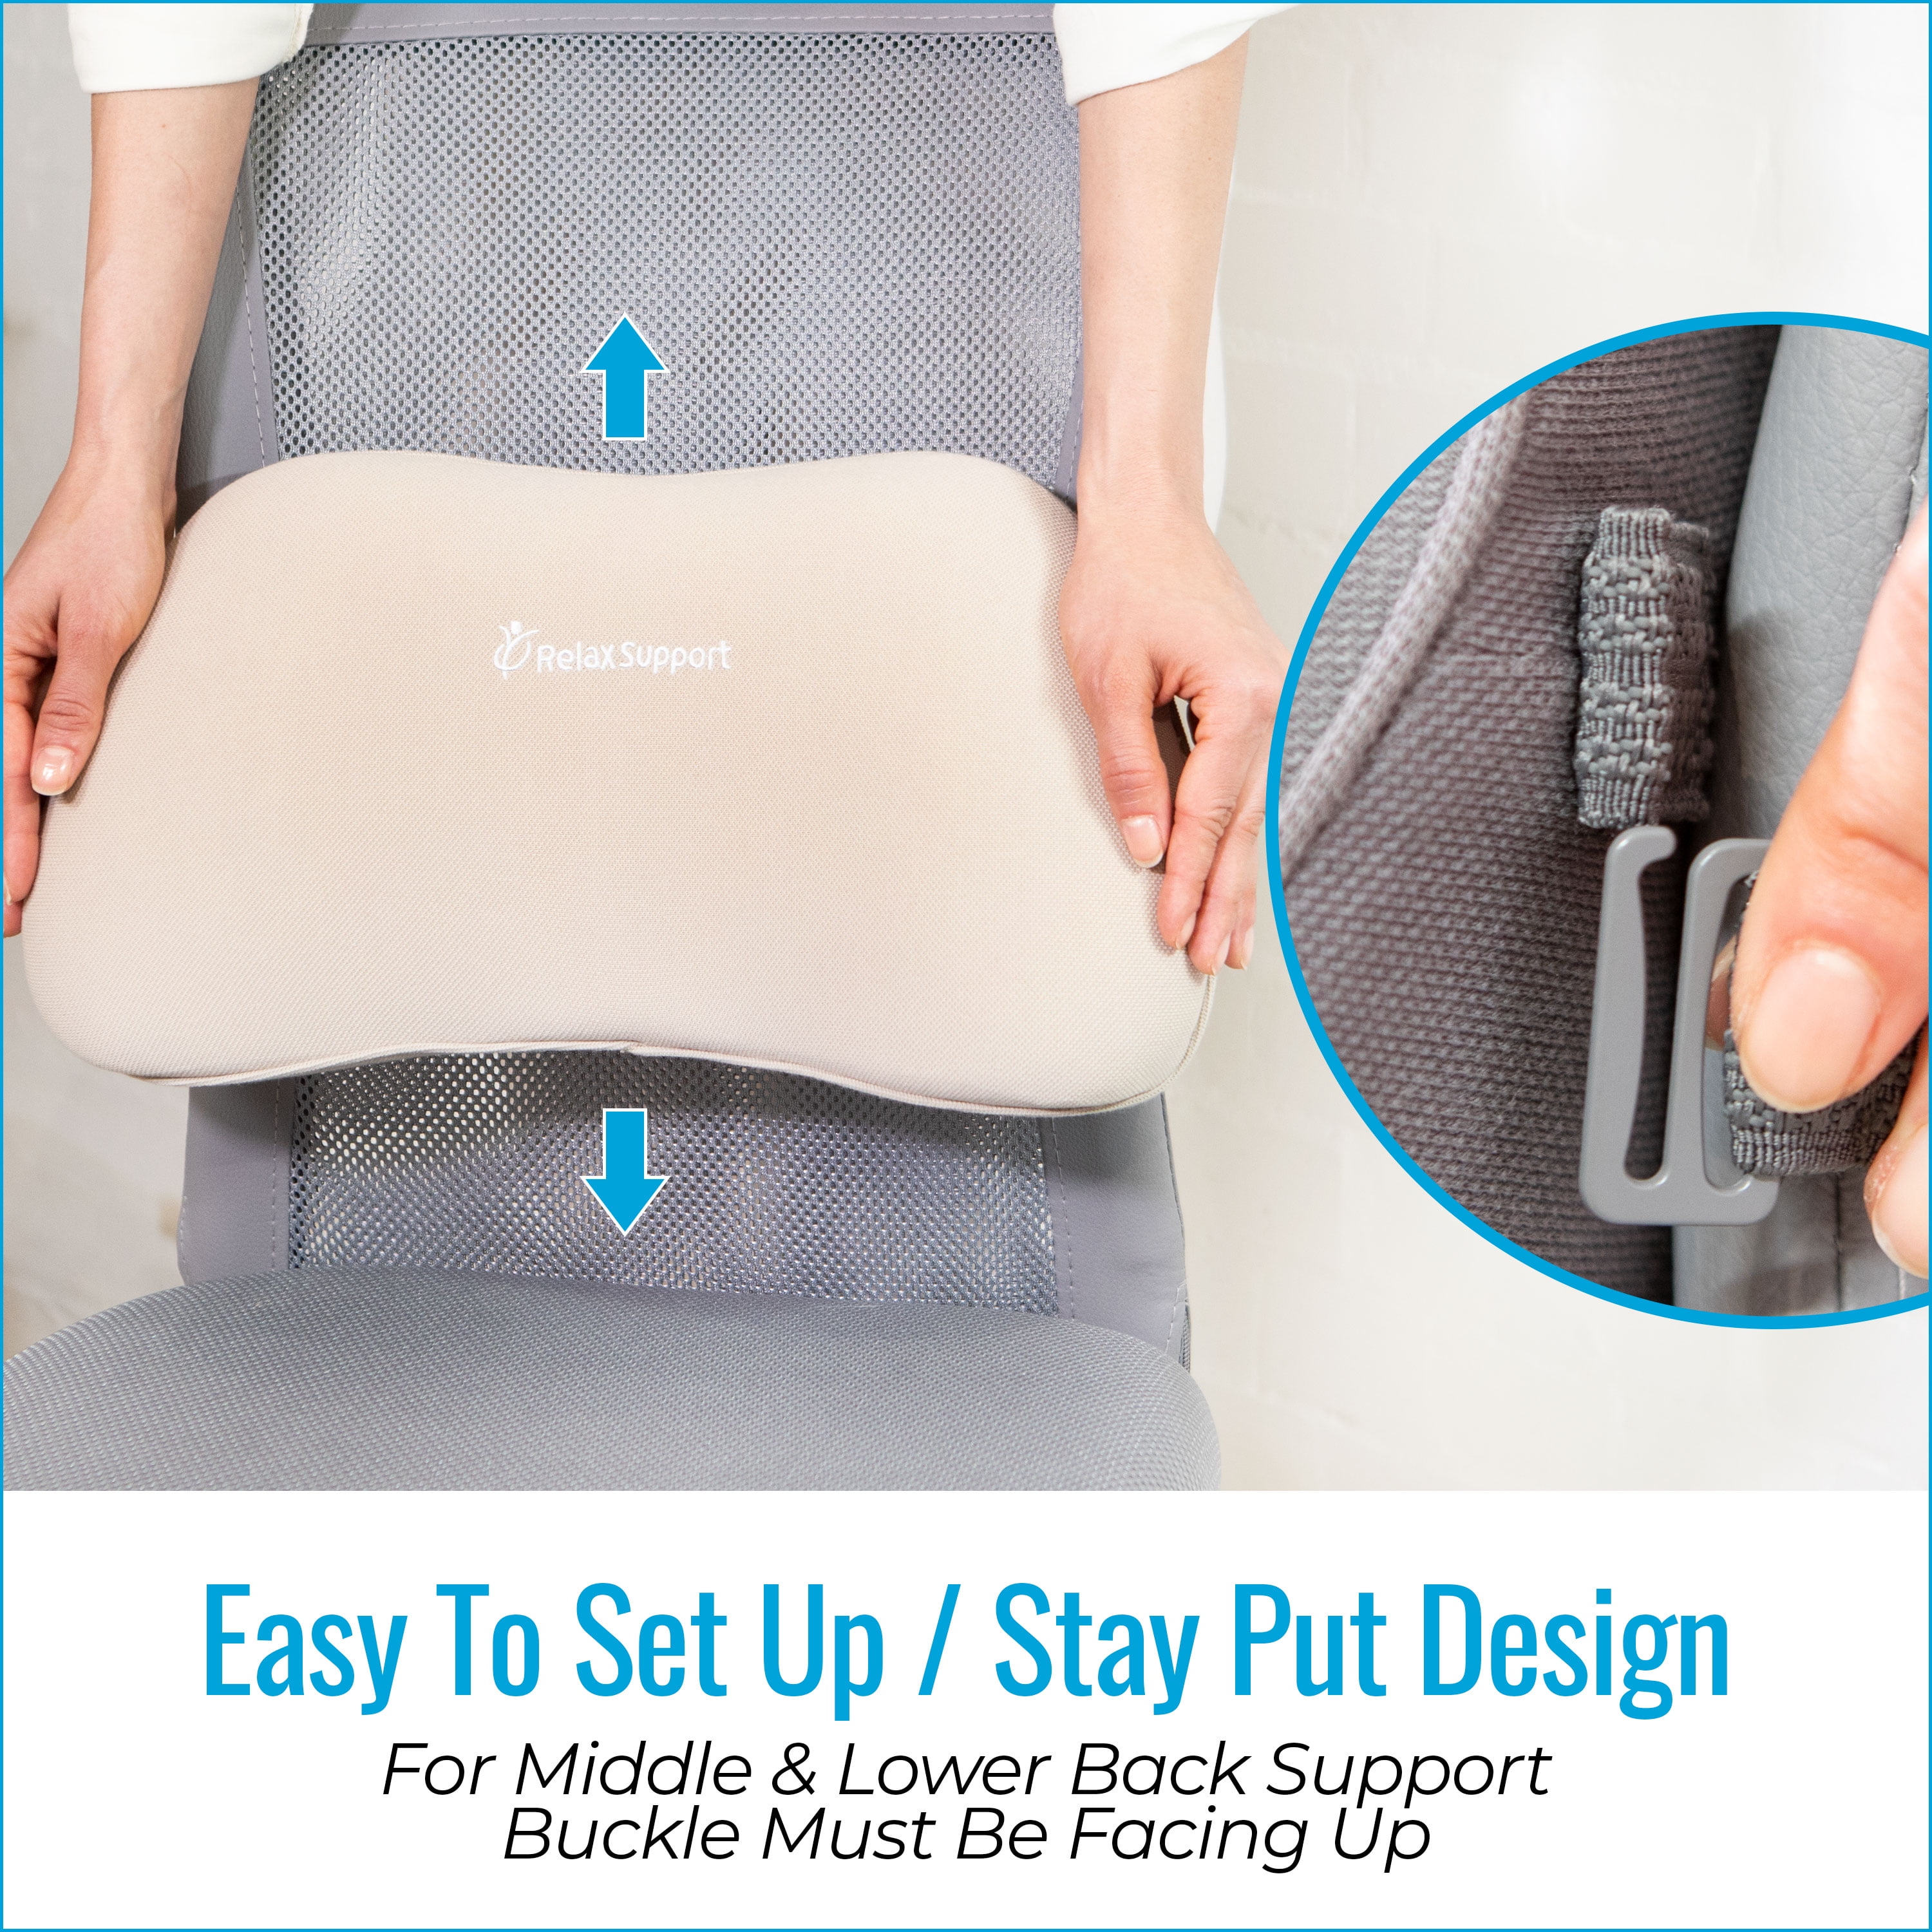 Relax Support - RS9 Black Lumbar Support Pillow - 100% Memory Foam